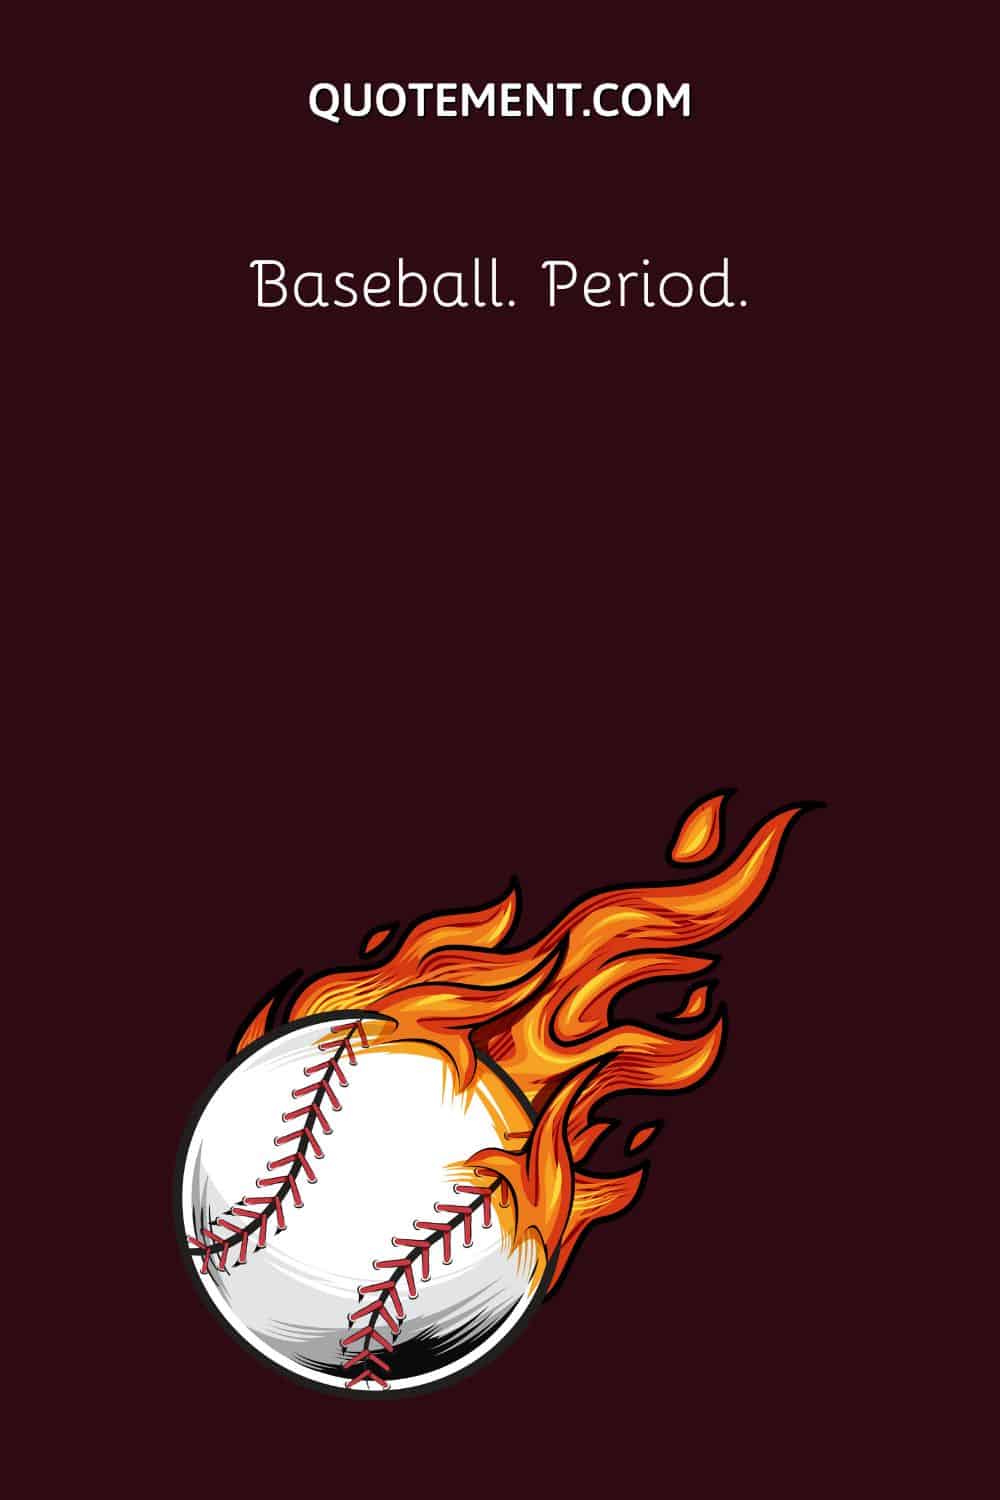 Baseball. Period